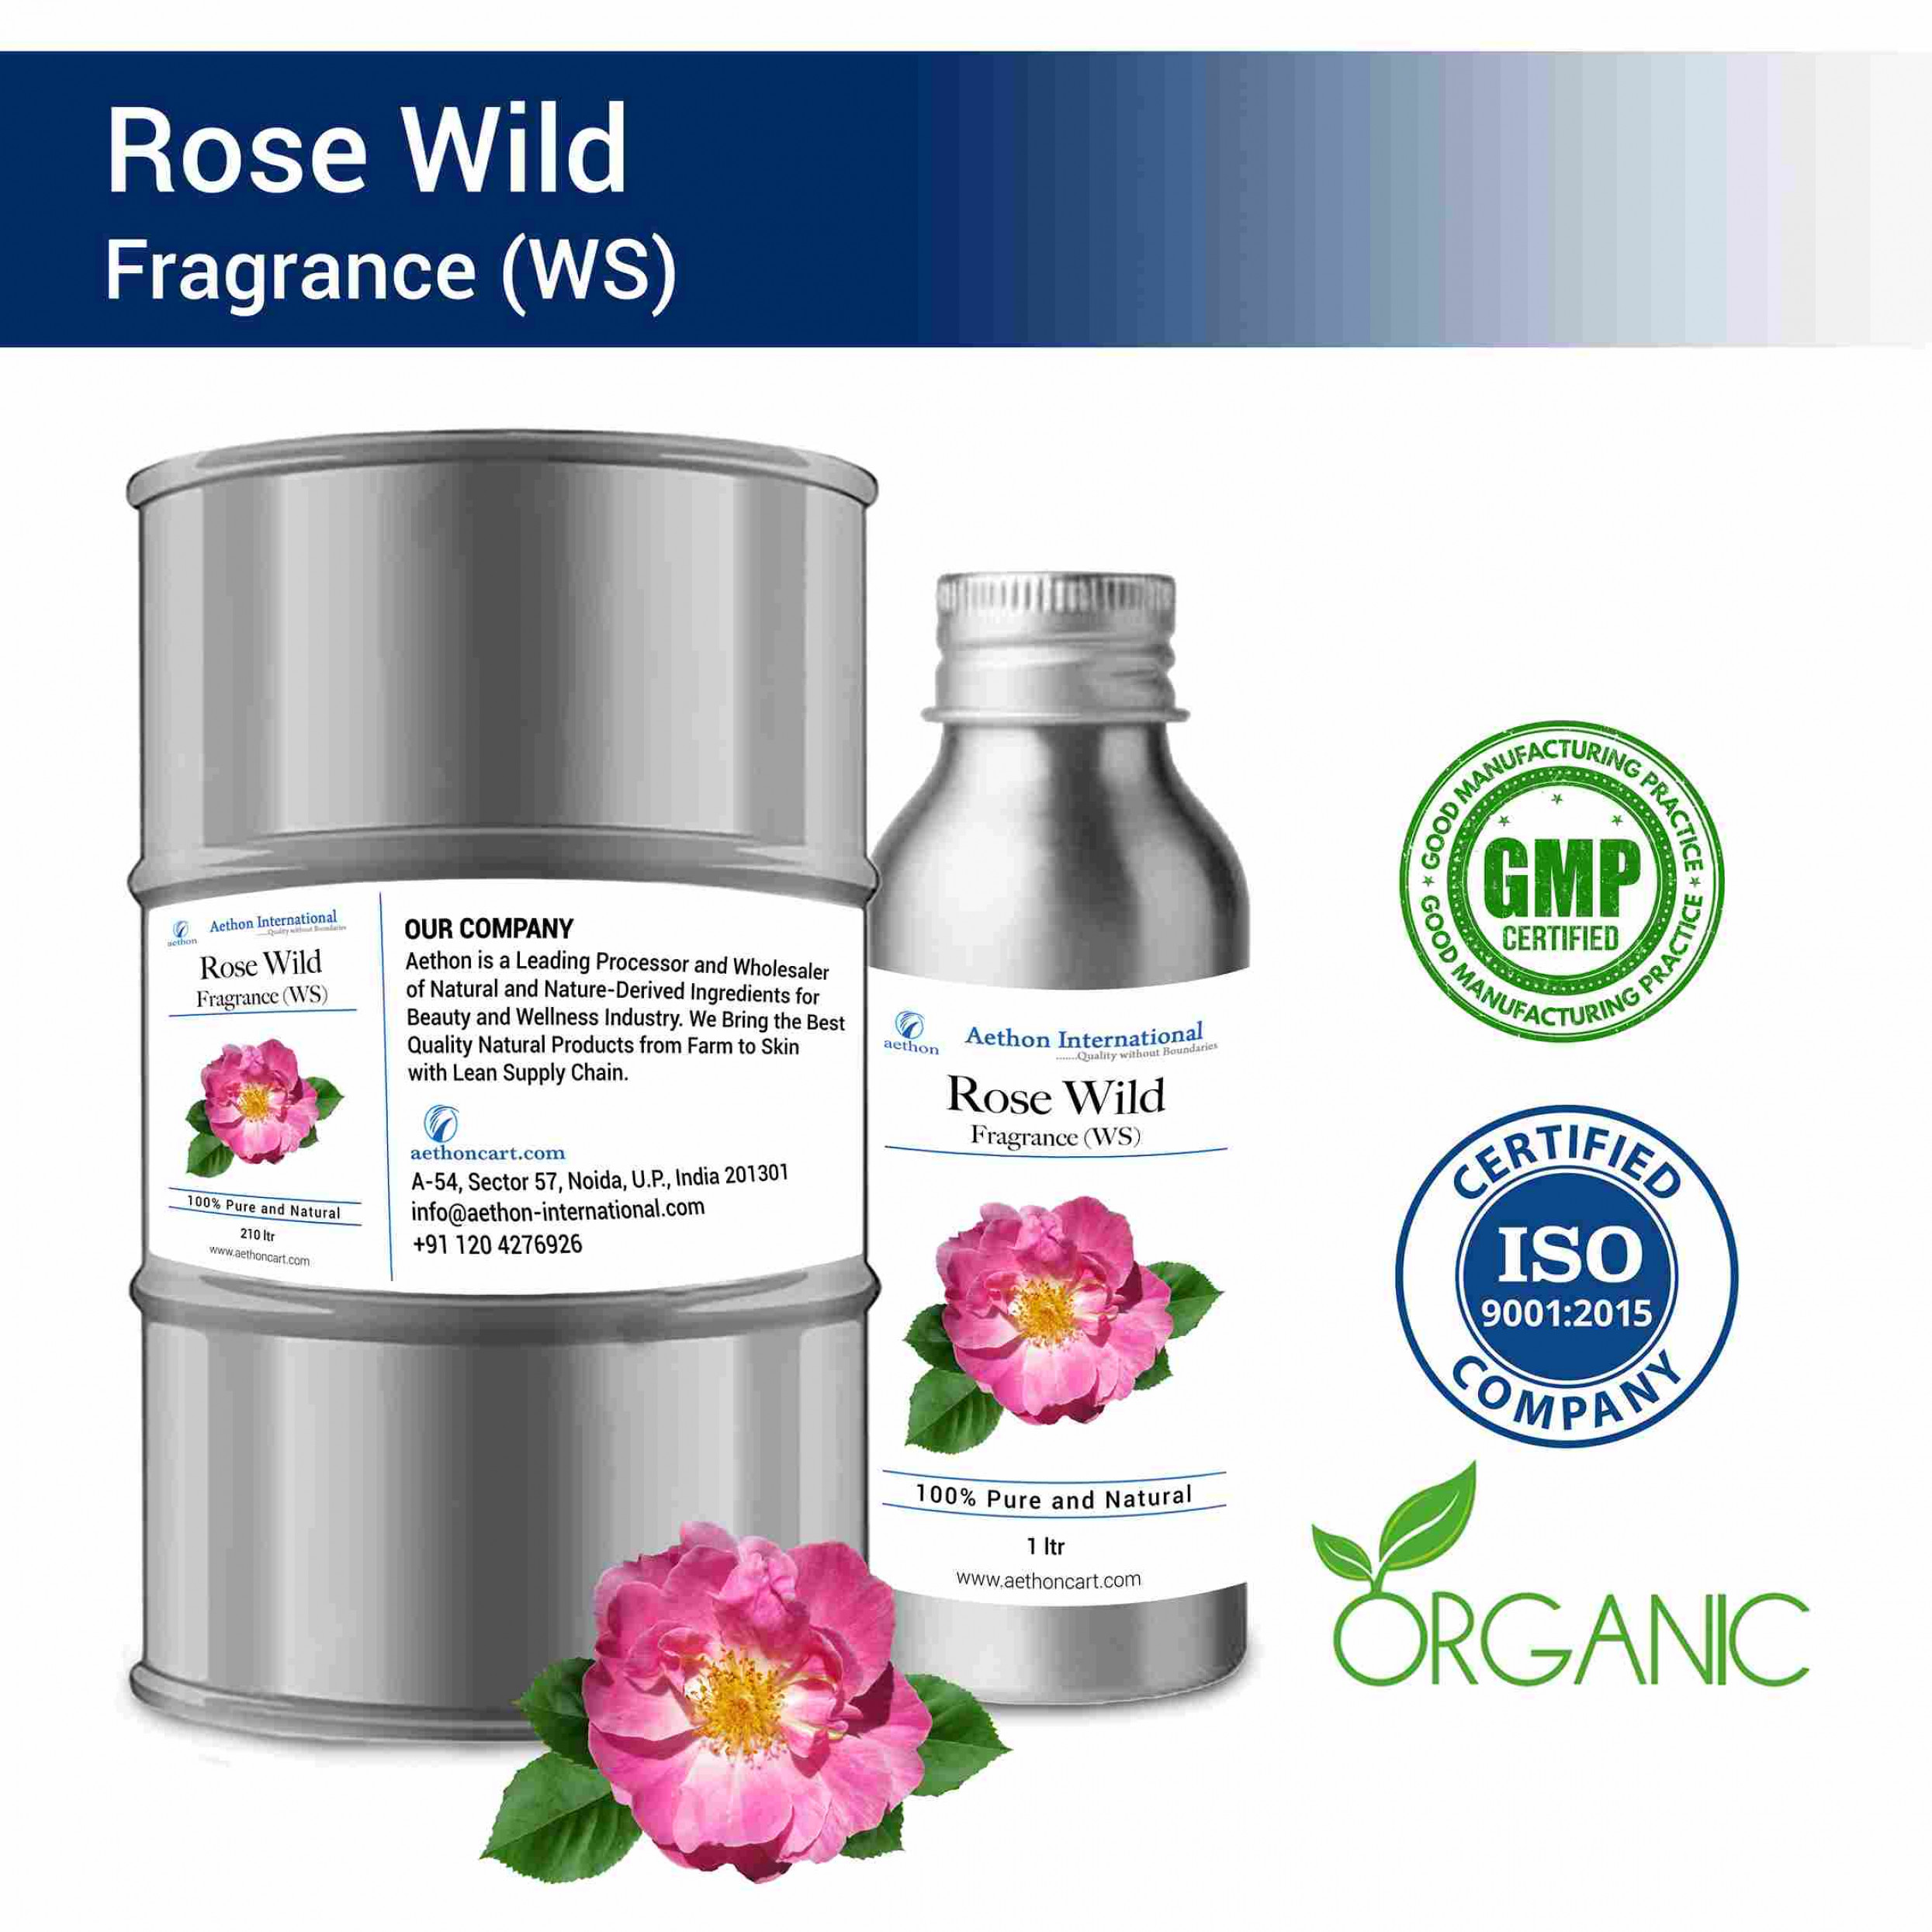 Rose Wild Fragrance (WS)